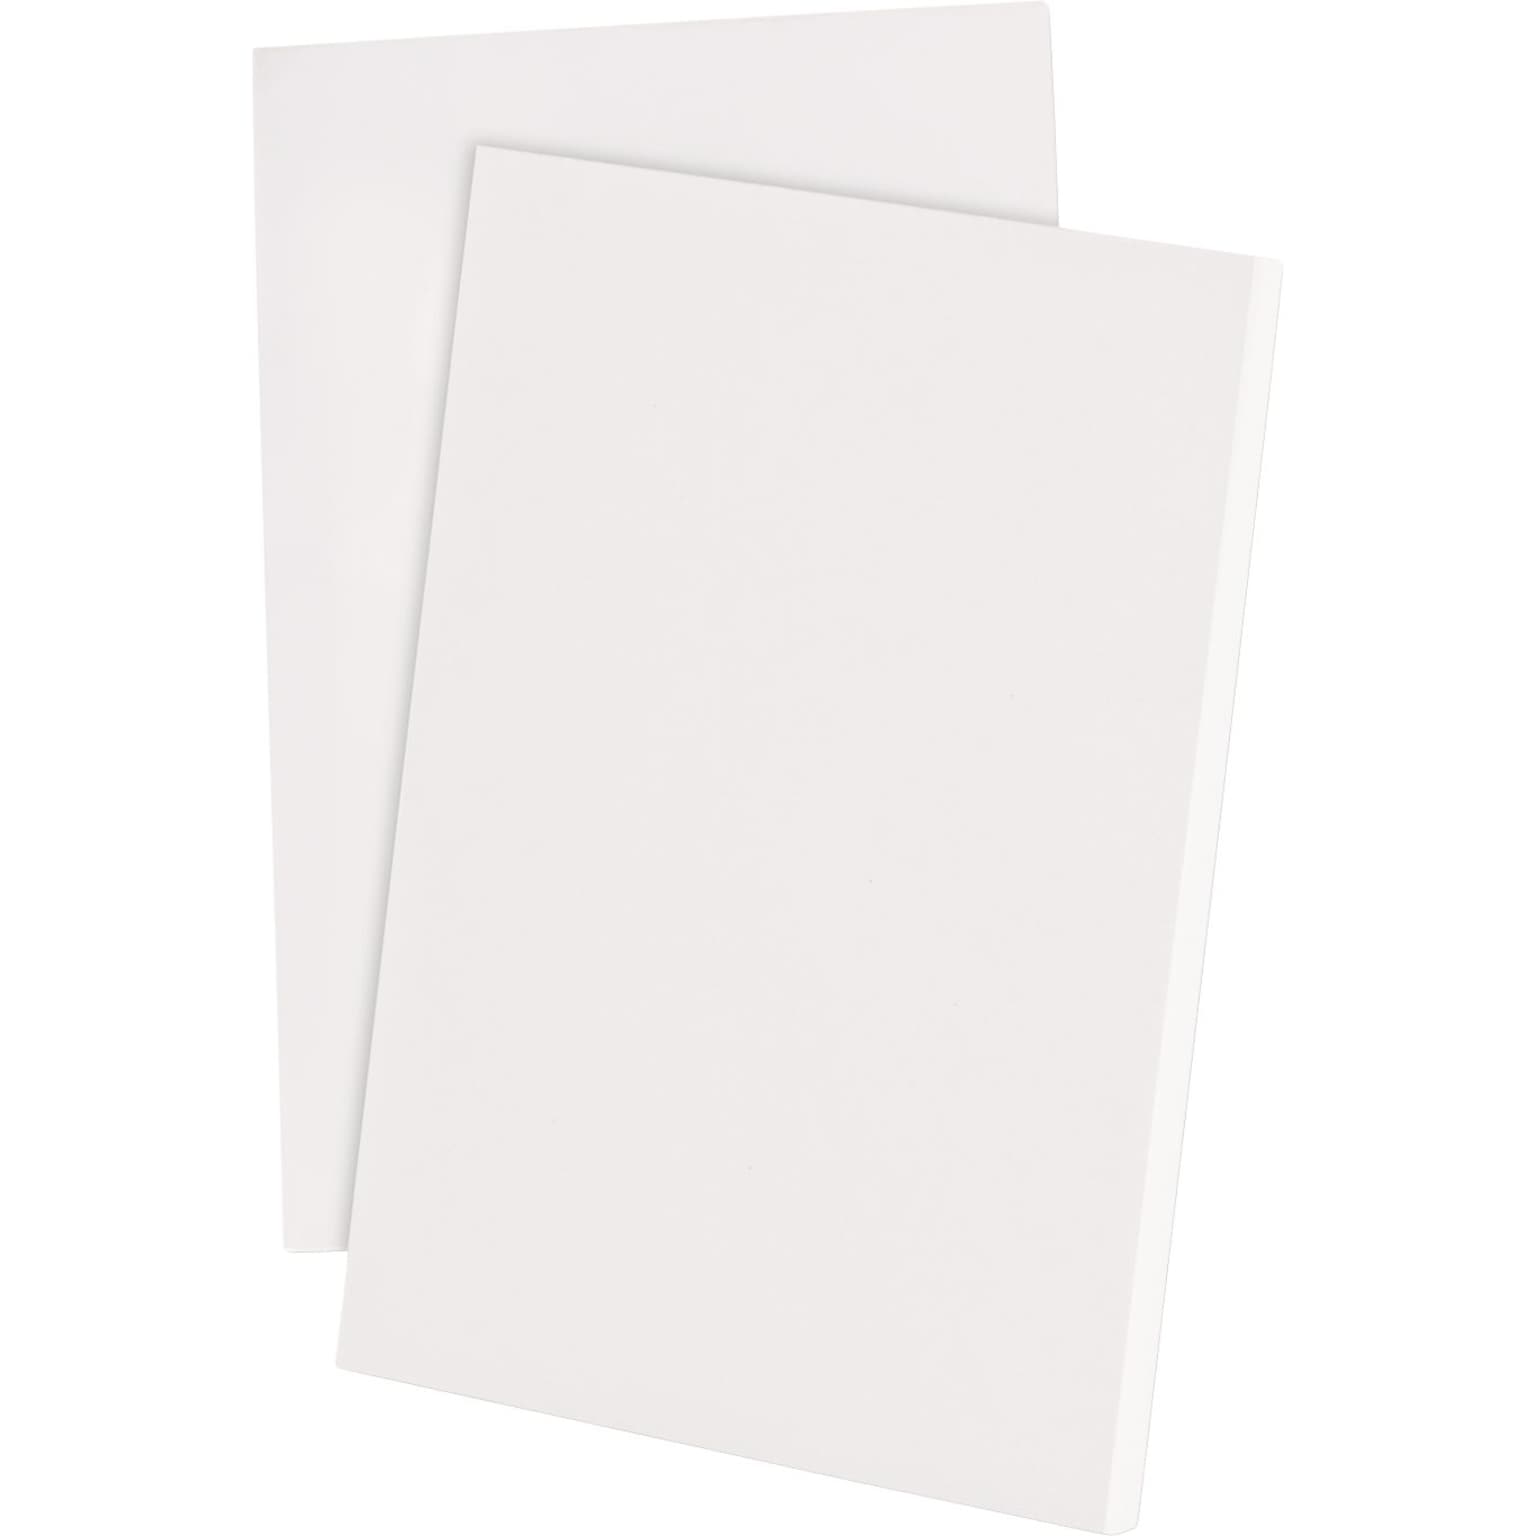 Ampad 1-Subject Pocket Notebook, 4 x 6, 100 Sheets, White, /Dozen (21-731)